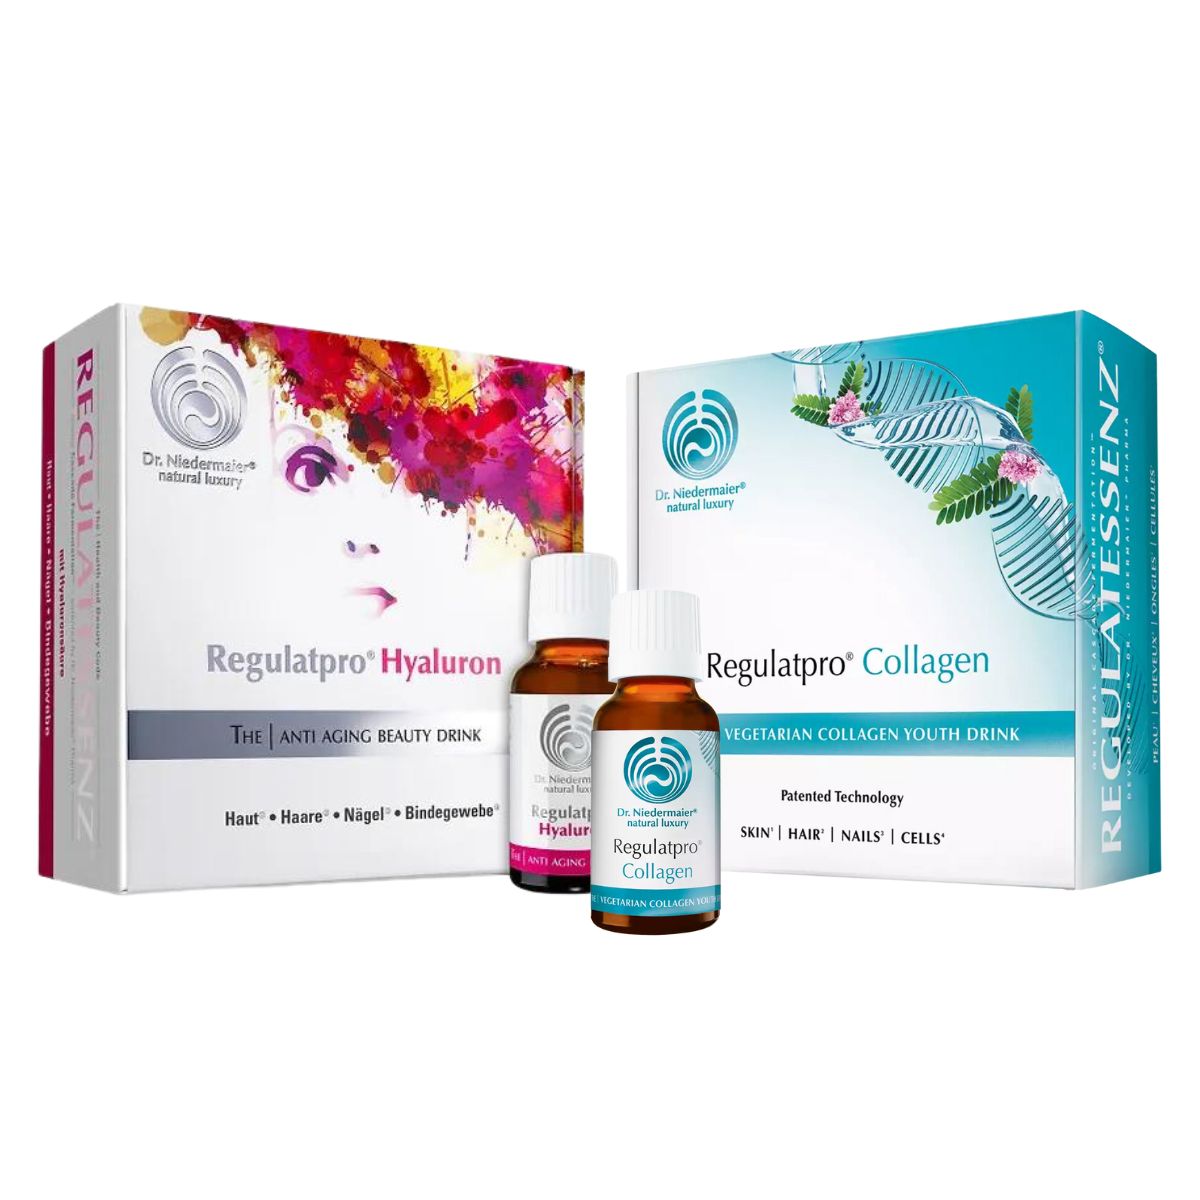 Regulatpro Hyaluron & Collagen Beauty Set